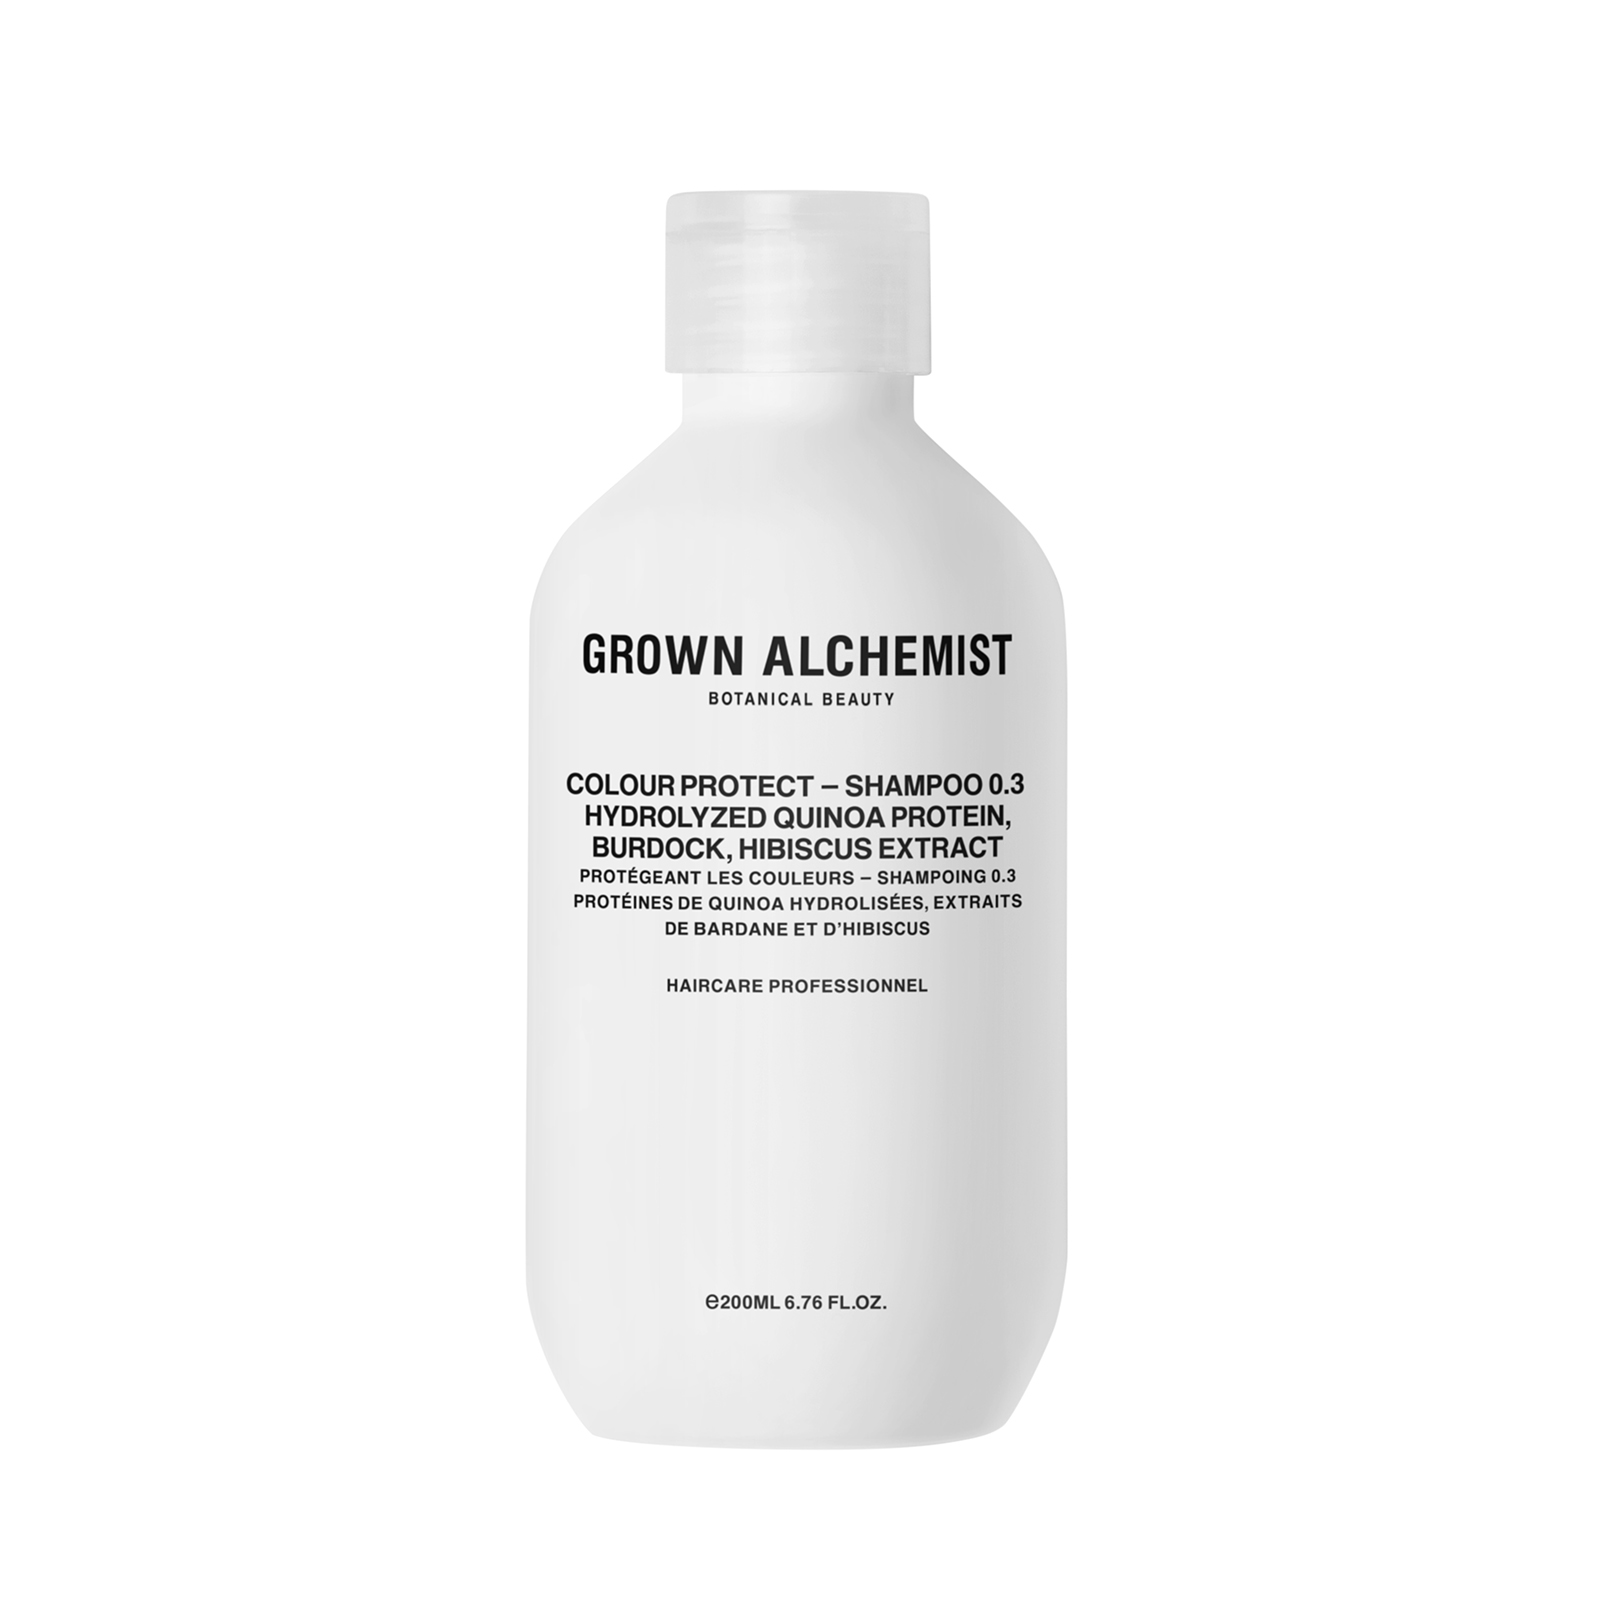 Grown - Alchemist Protect | Extract Hydrolyzed 0.3: Shampoo Colour Hibiscus Protein, Burdock, Quinoa